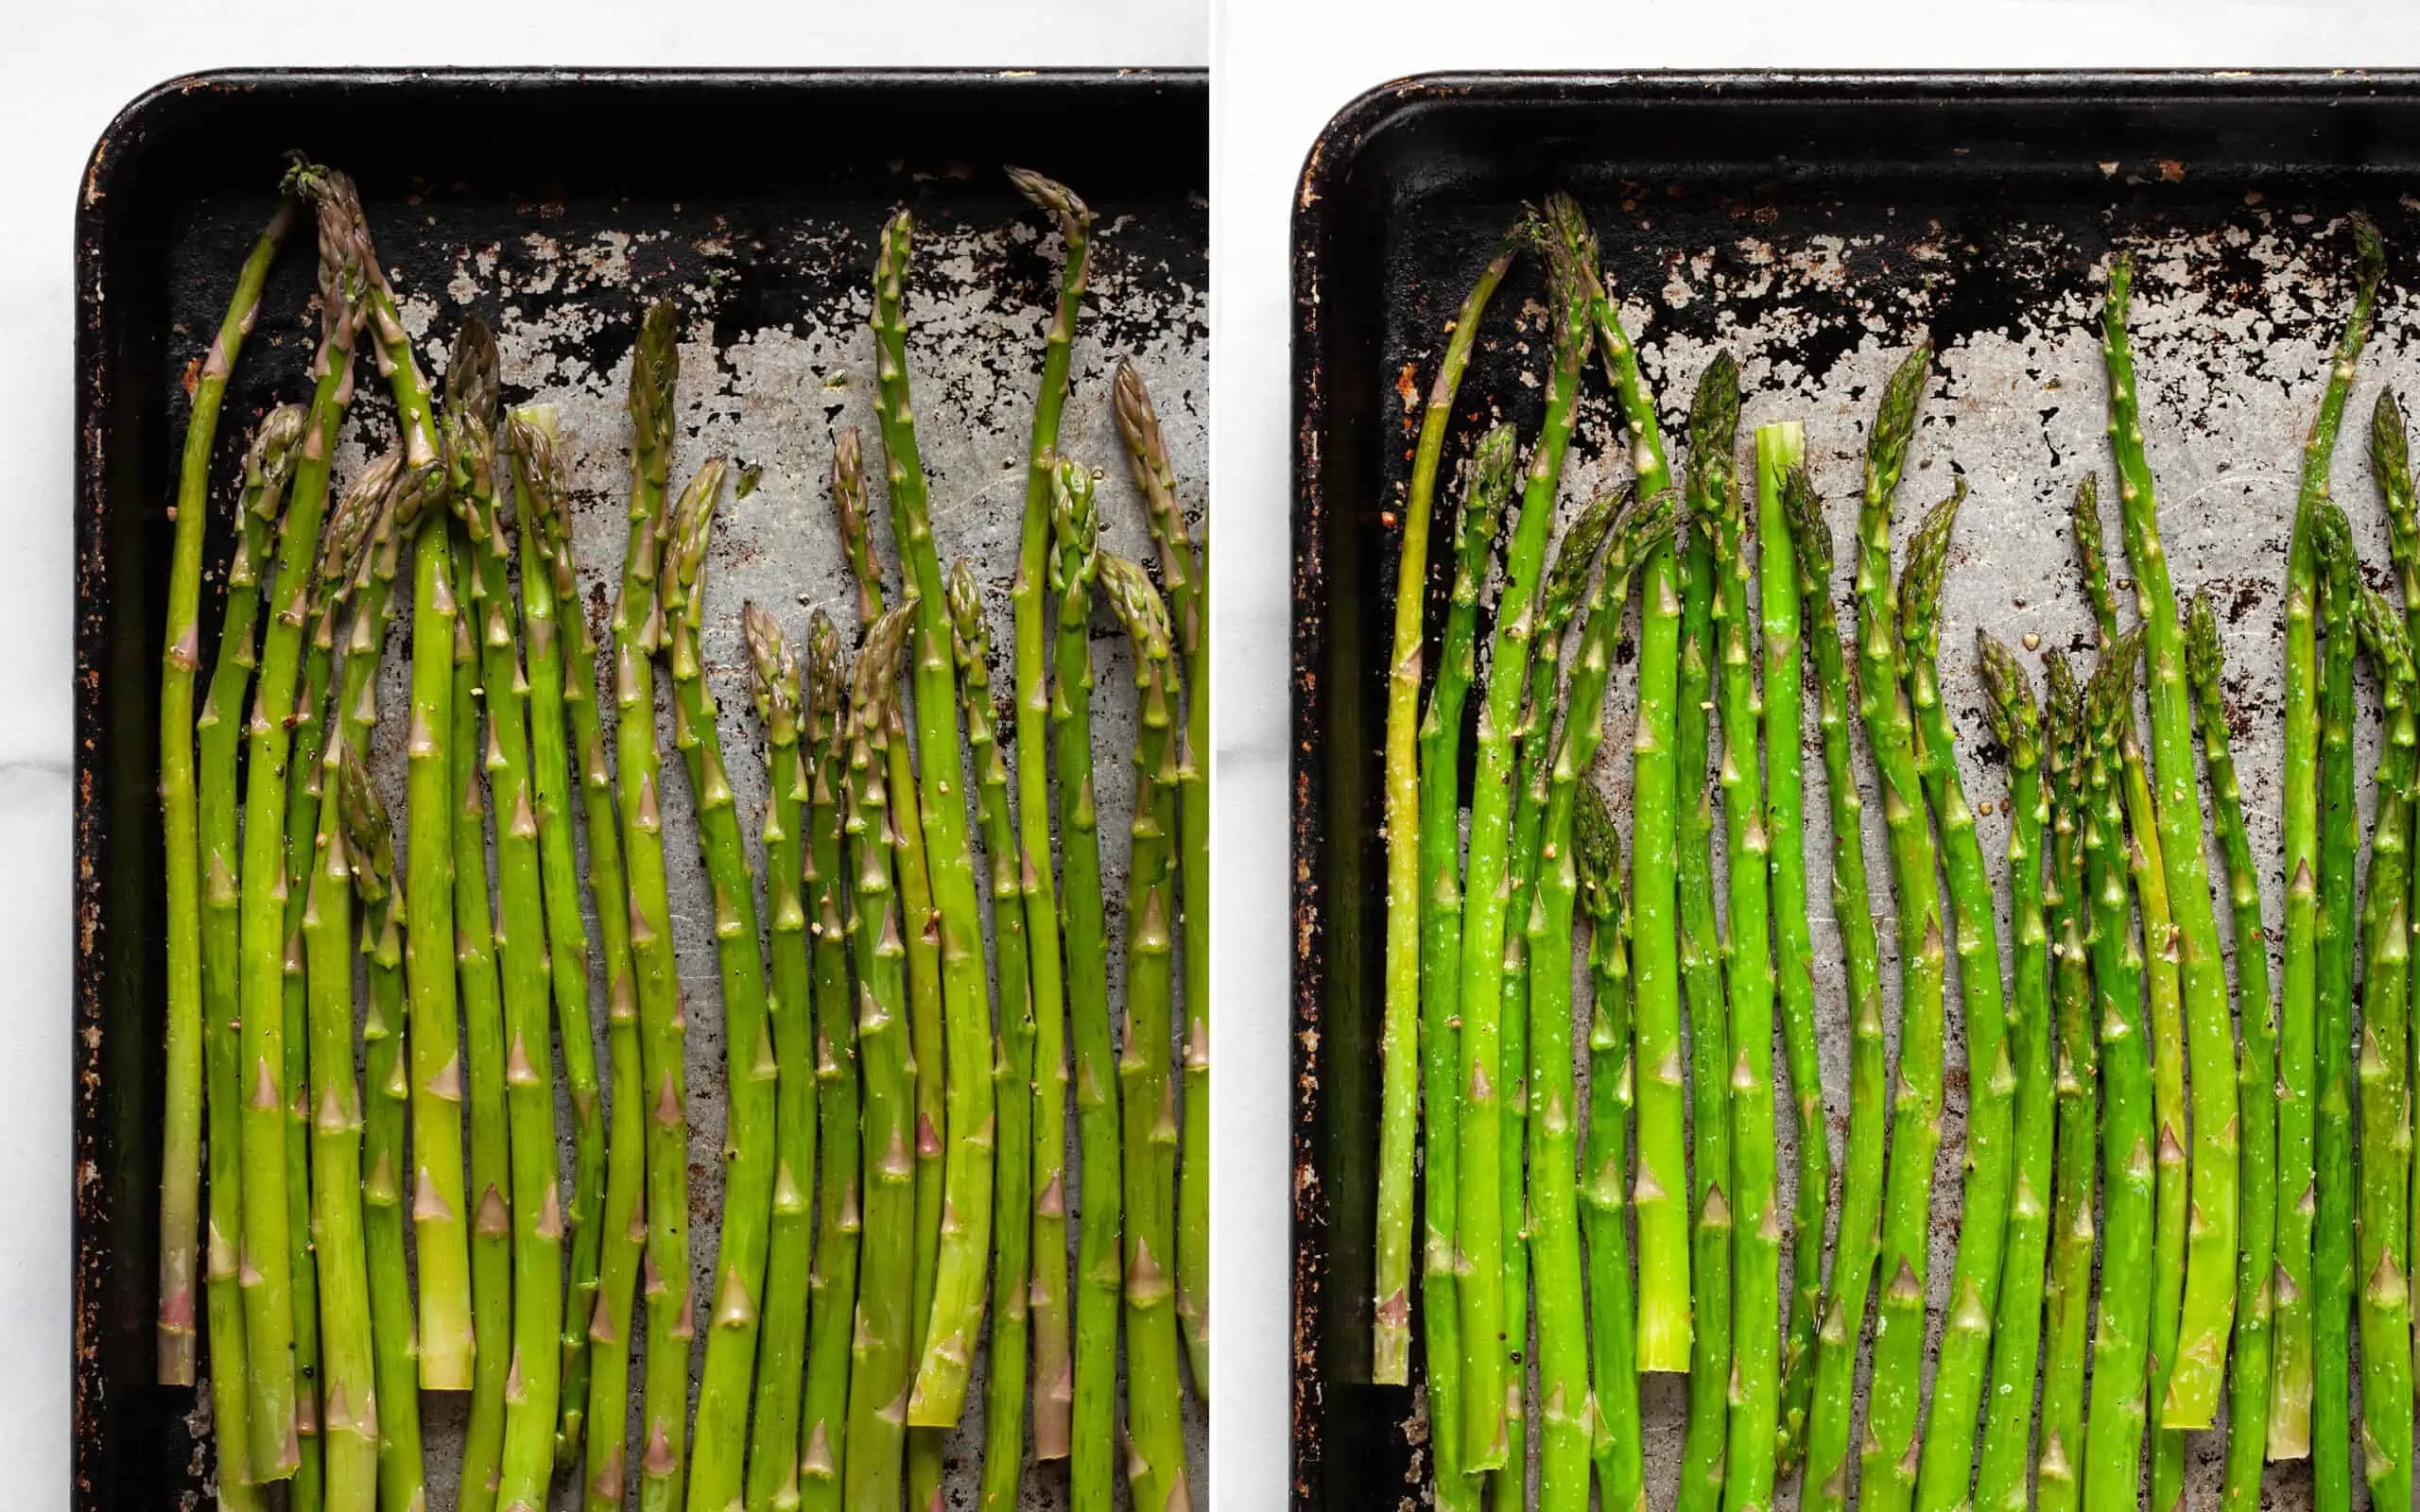 Raw asparagus on a sheet pan and roasted asparagus on a sheet pan.